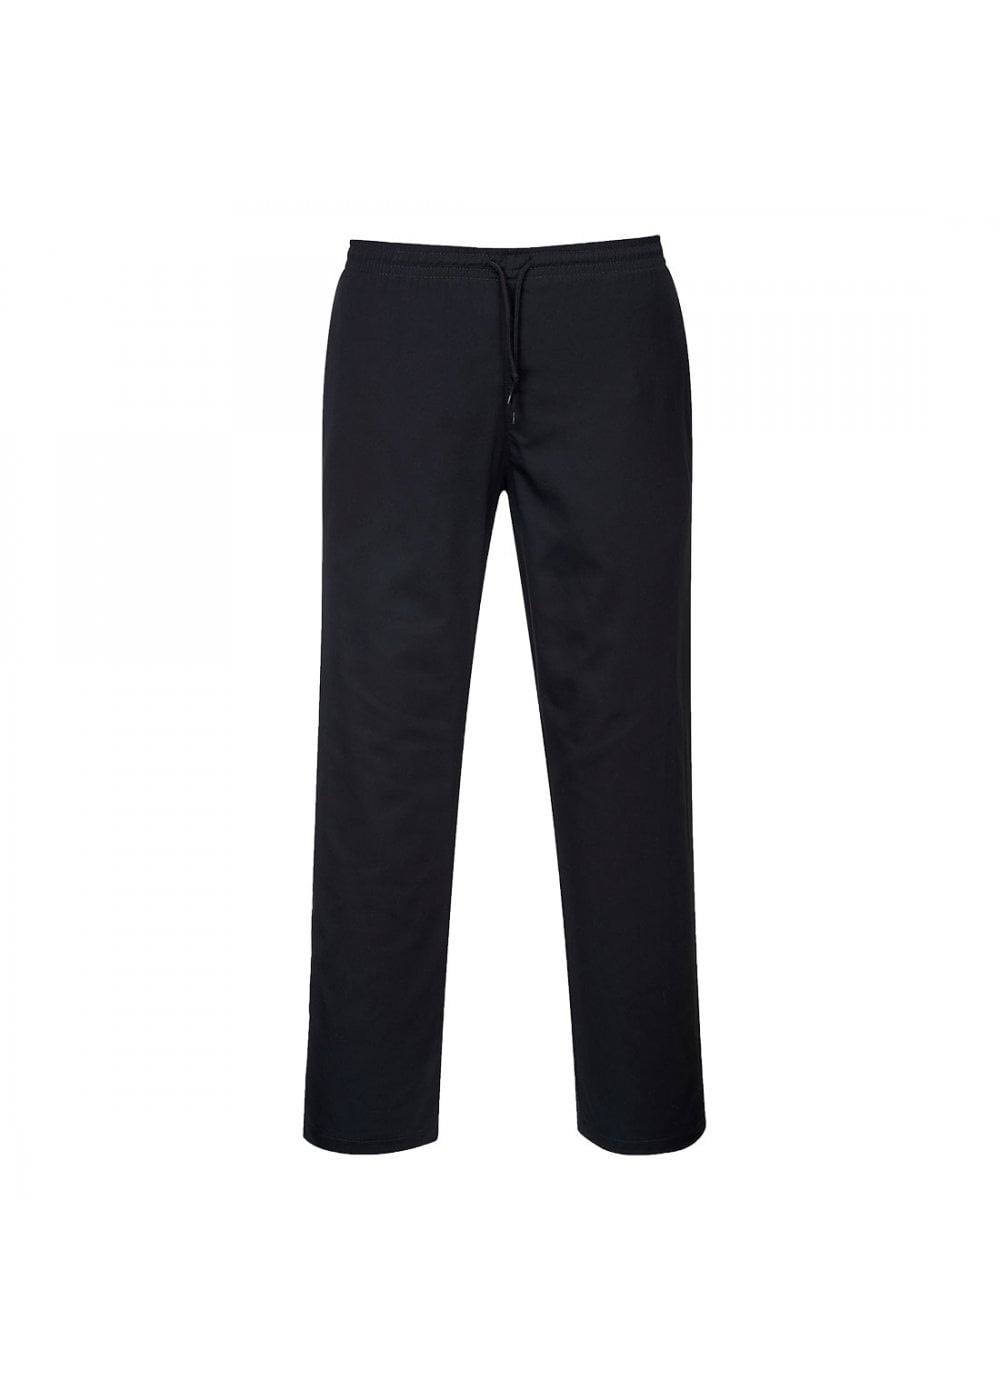 PORTWEST C070 black drawstring chefs elasticated trousers size XXS-4XL R/T leg